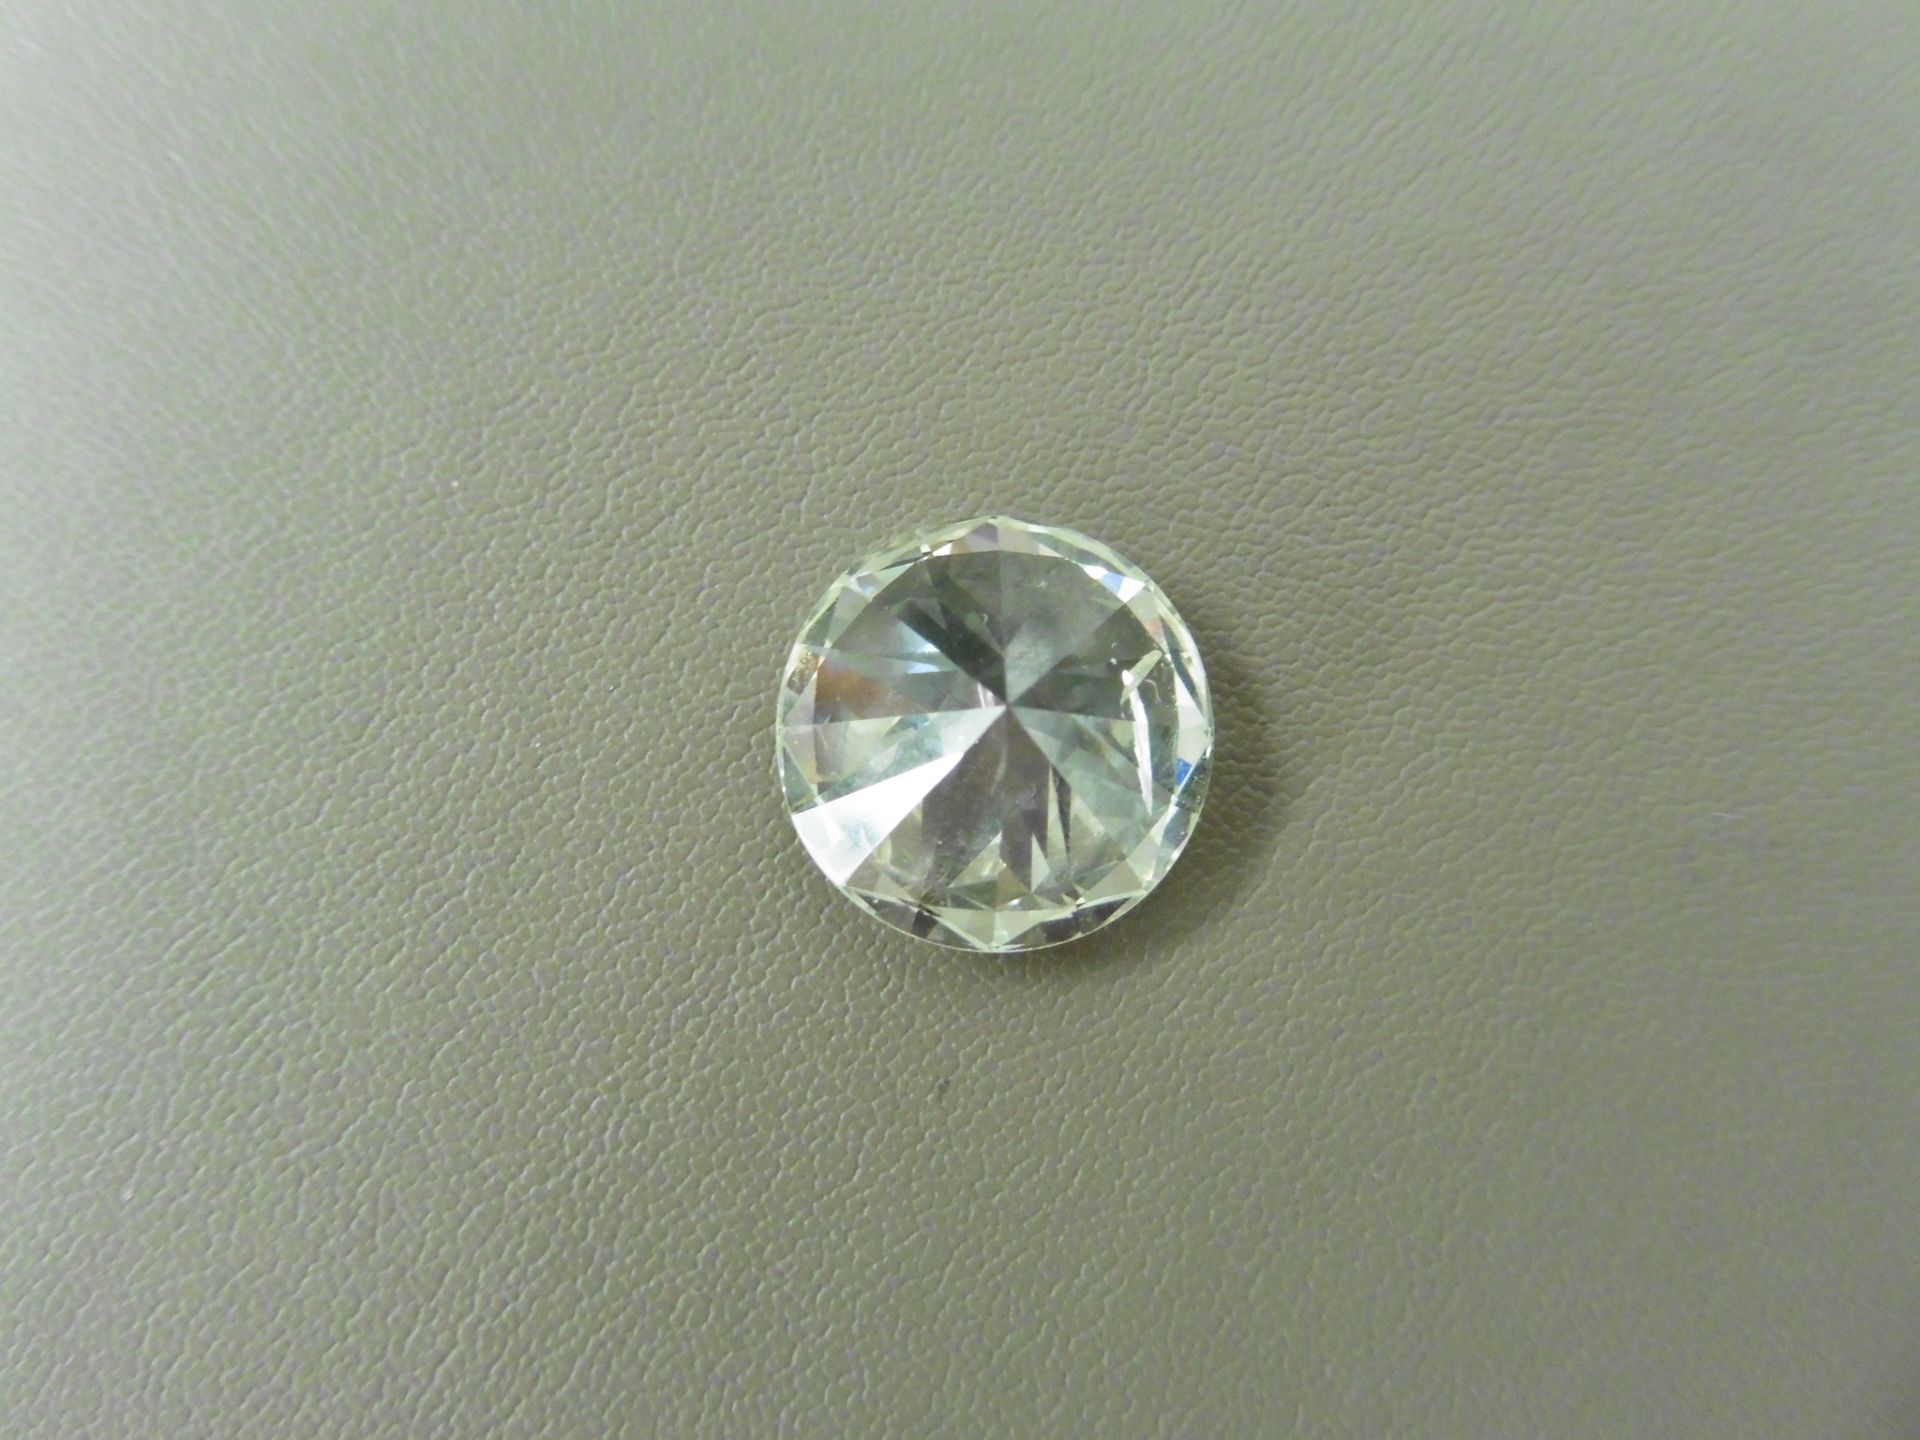 6.38ct natural loose brilliant cut diamond. K colourand I1 clarity. EGL certification. Valued at £ - Bild 3 aus 5